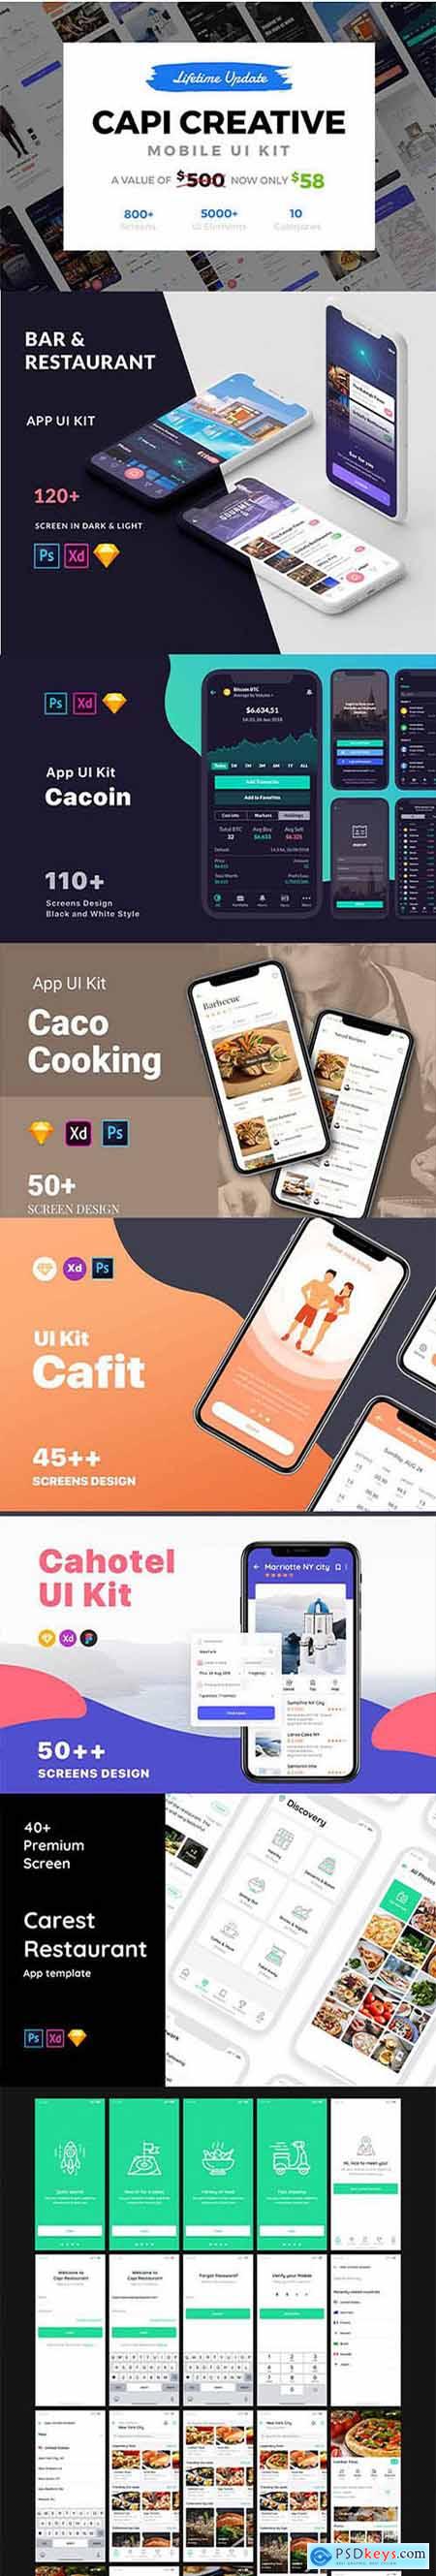 Capi Mobile UI Kit